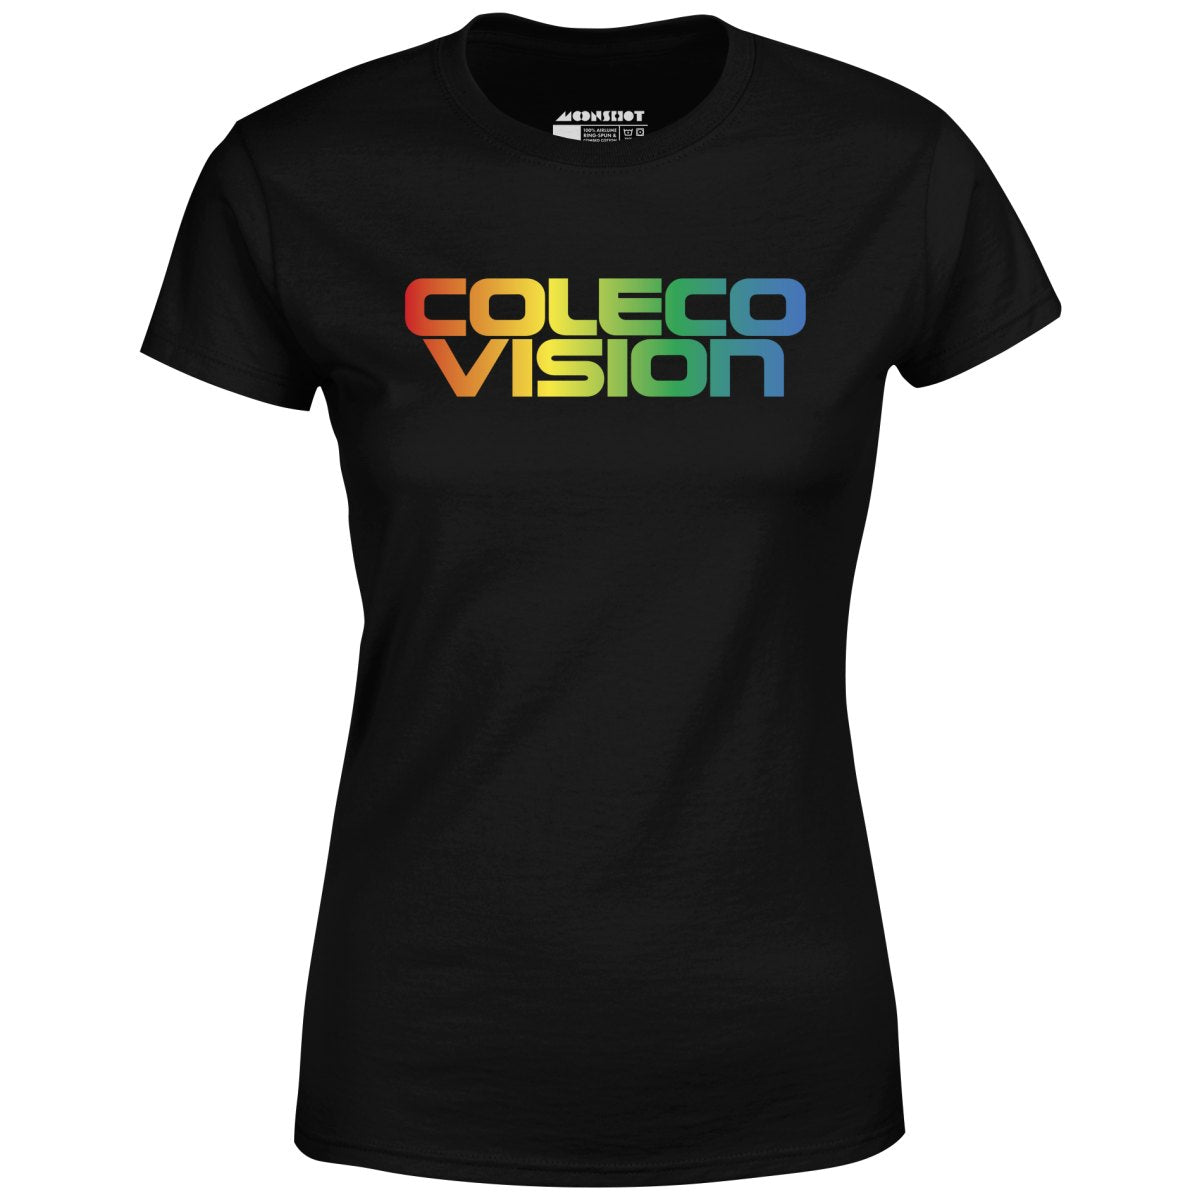 ColecoVision - Women's T-Shirt